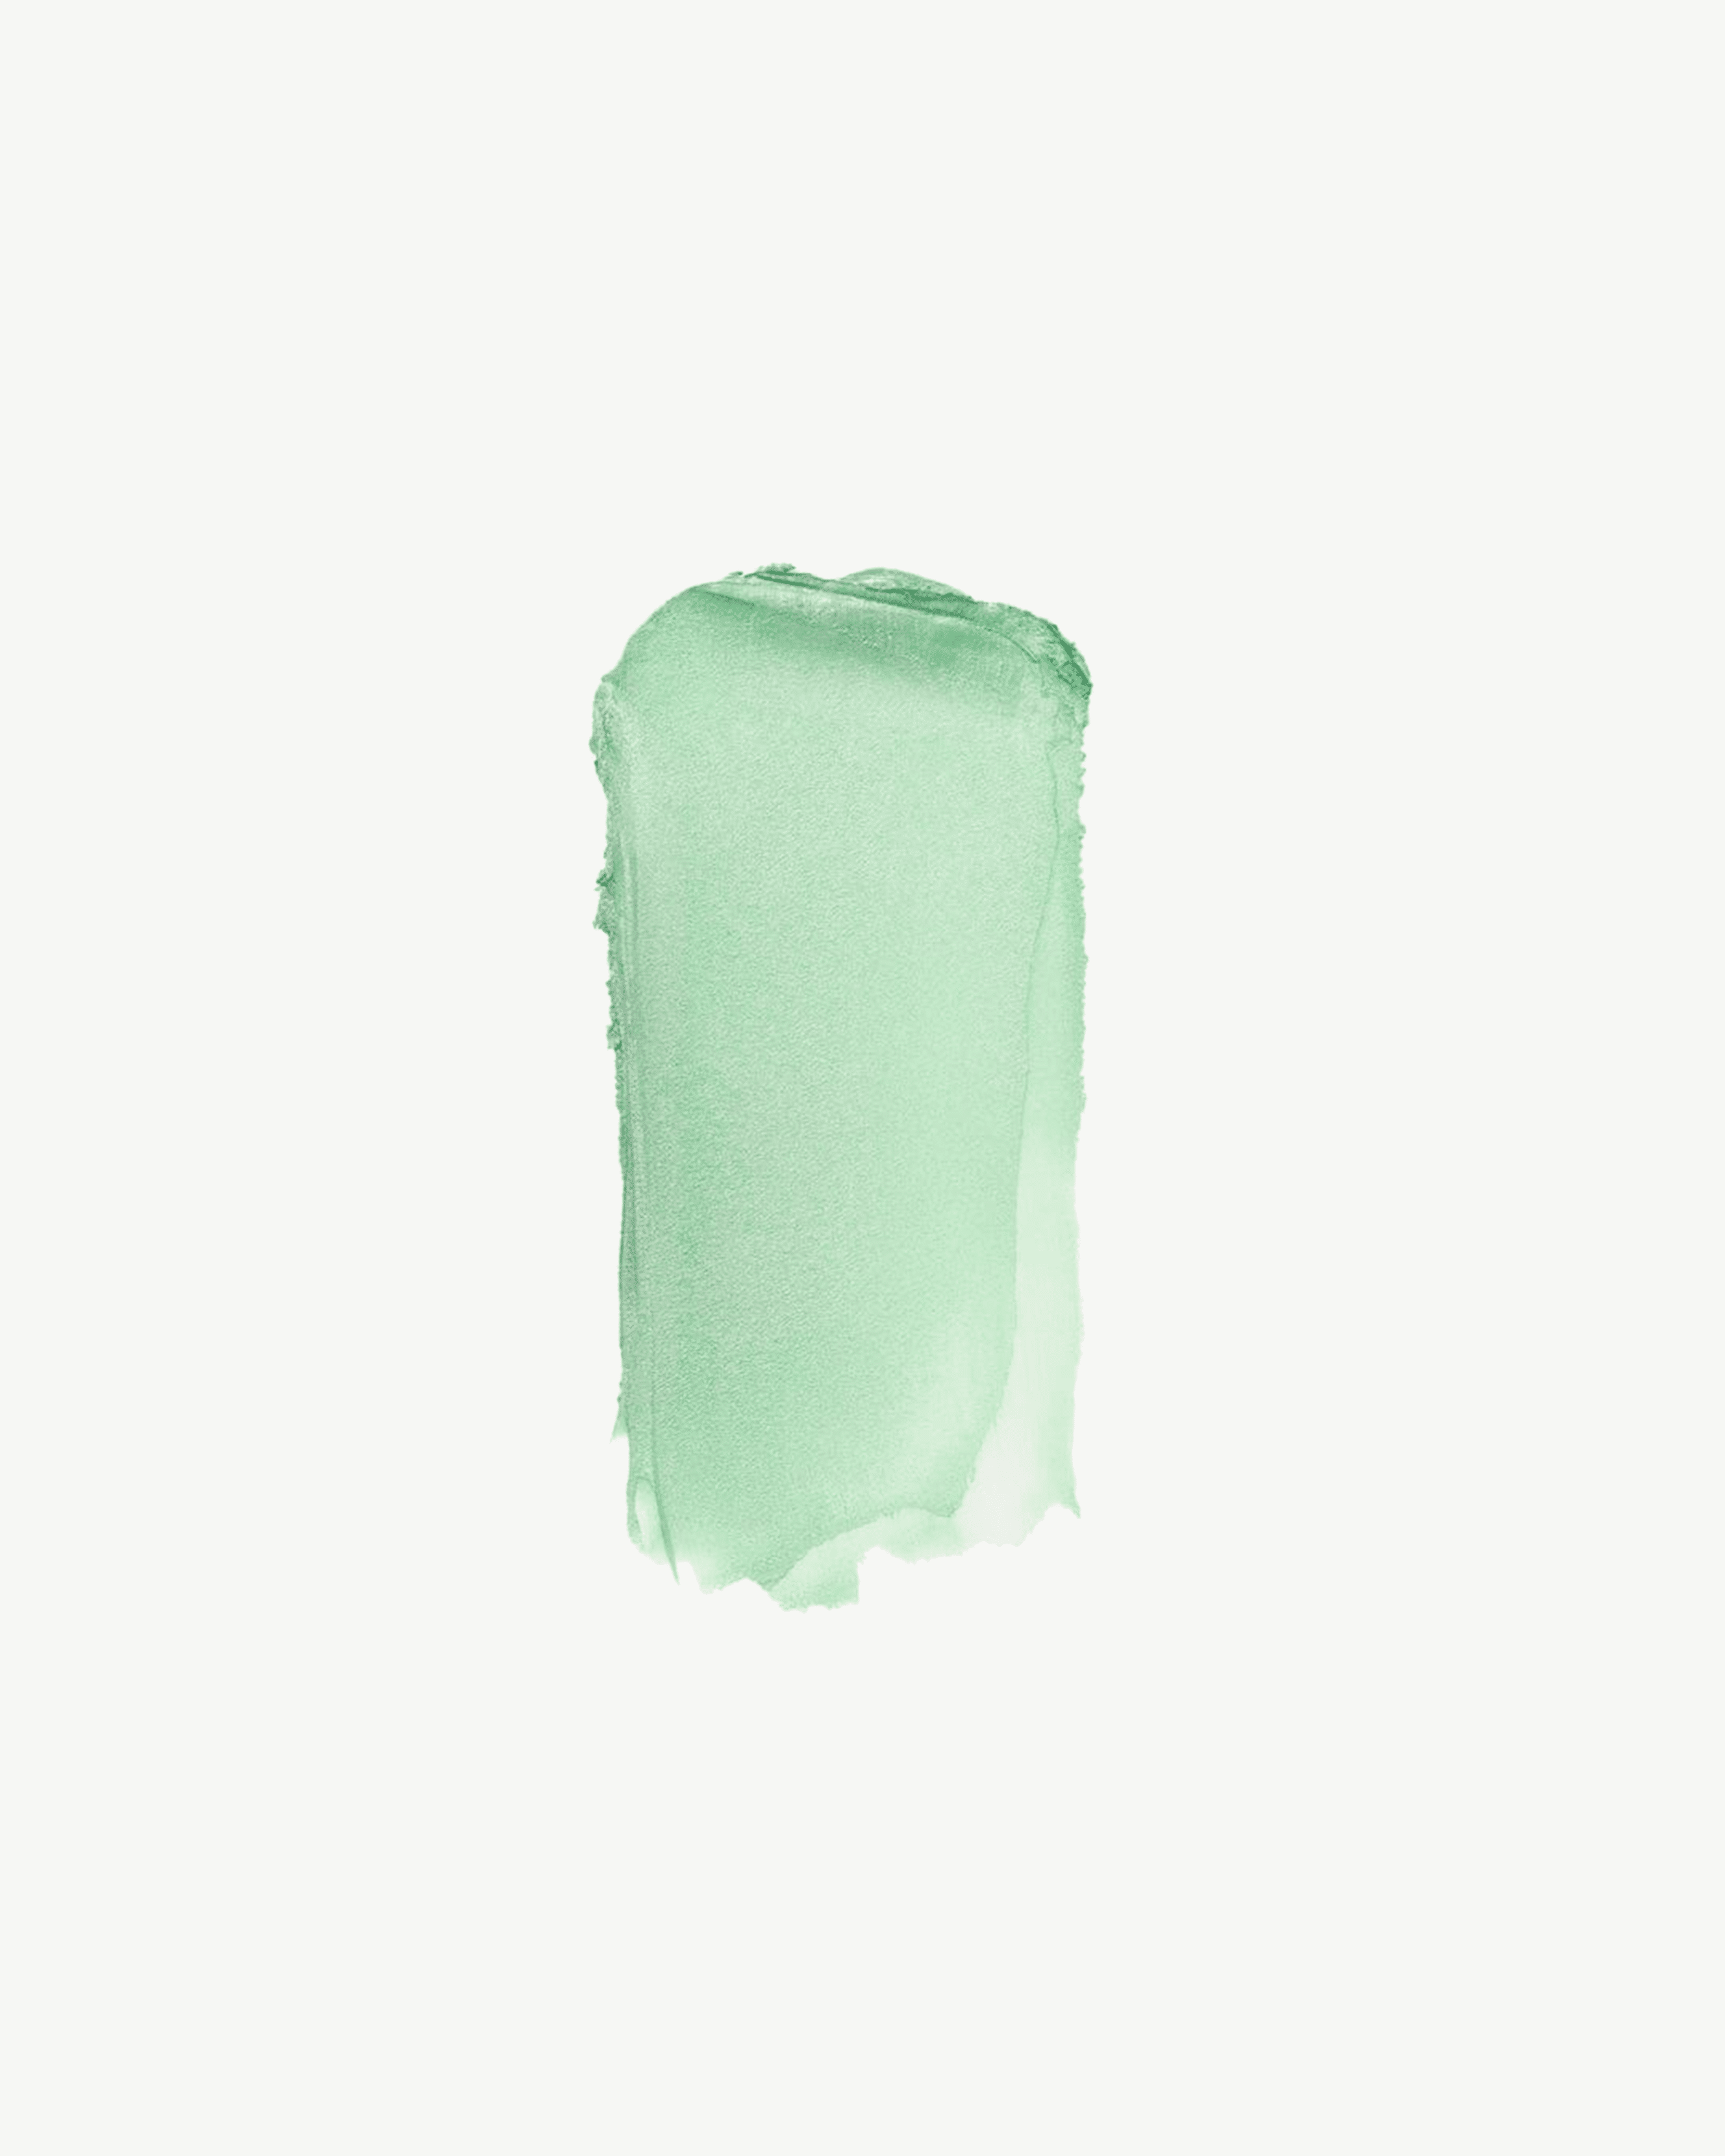 M85 (mint sea-foam green)